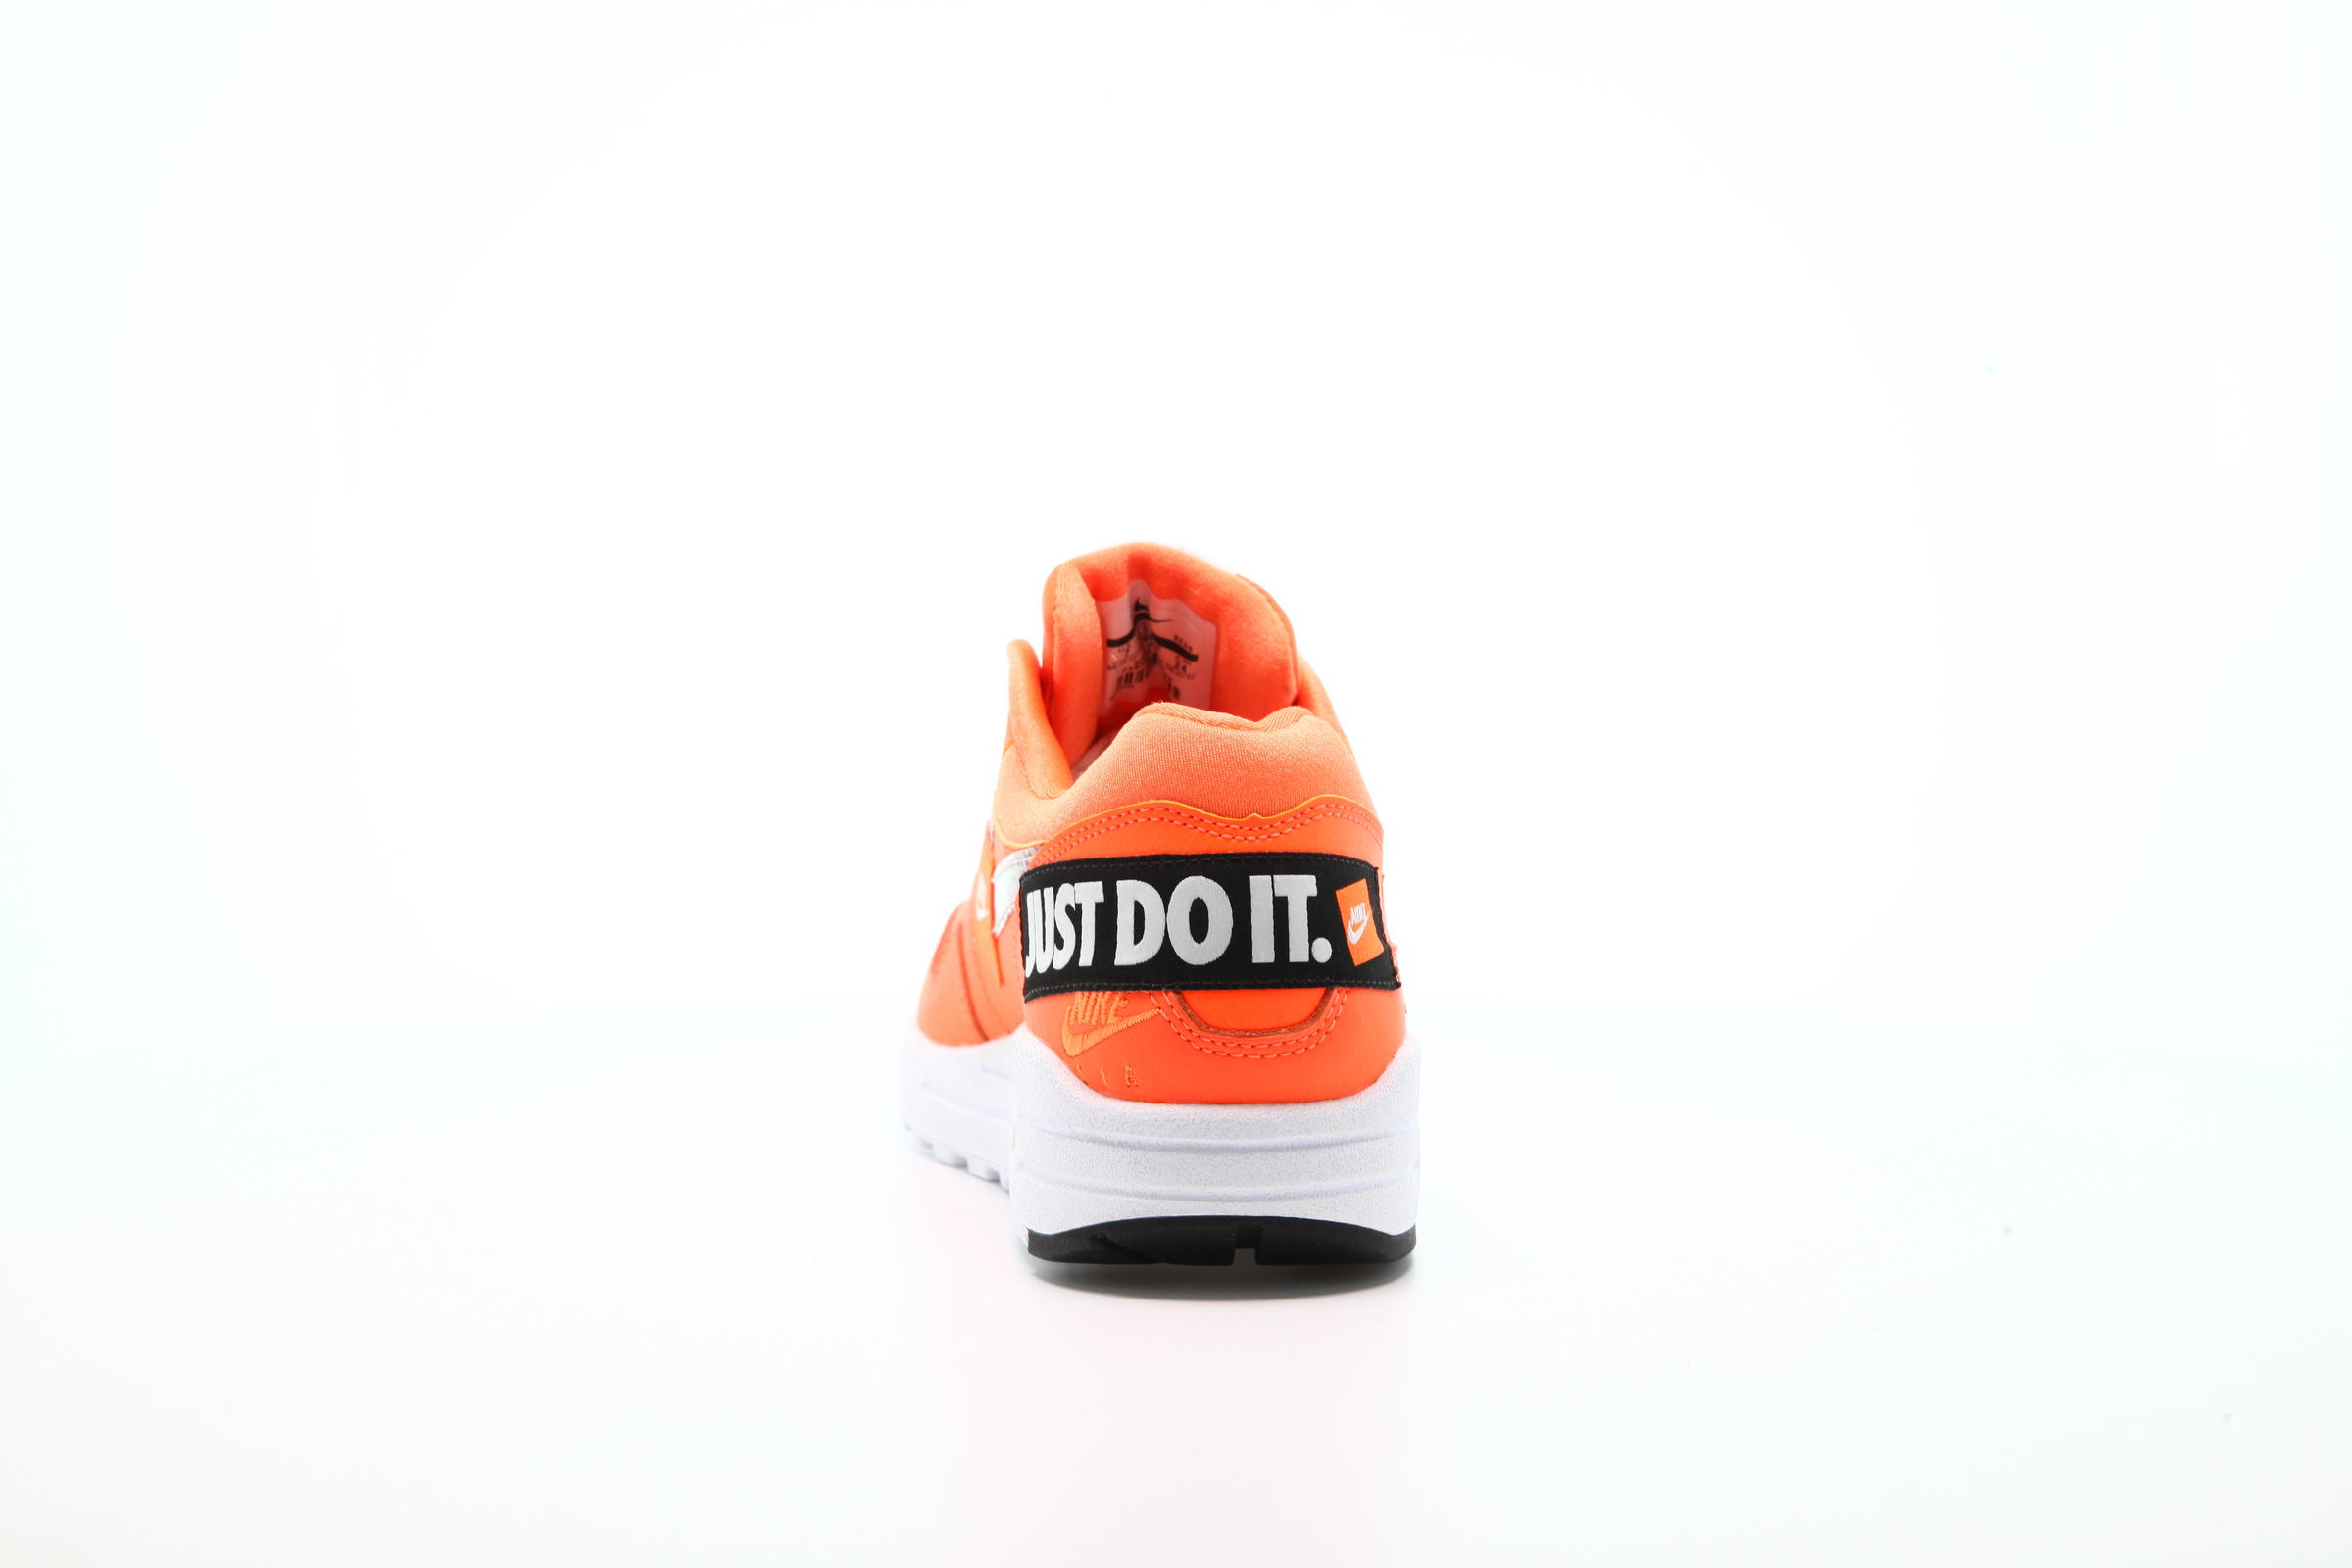 Nike Wmns Air Max 1 Lx Just Do It "Total Orange"